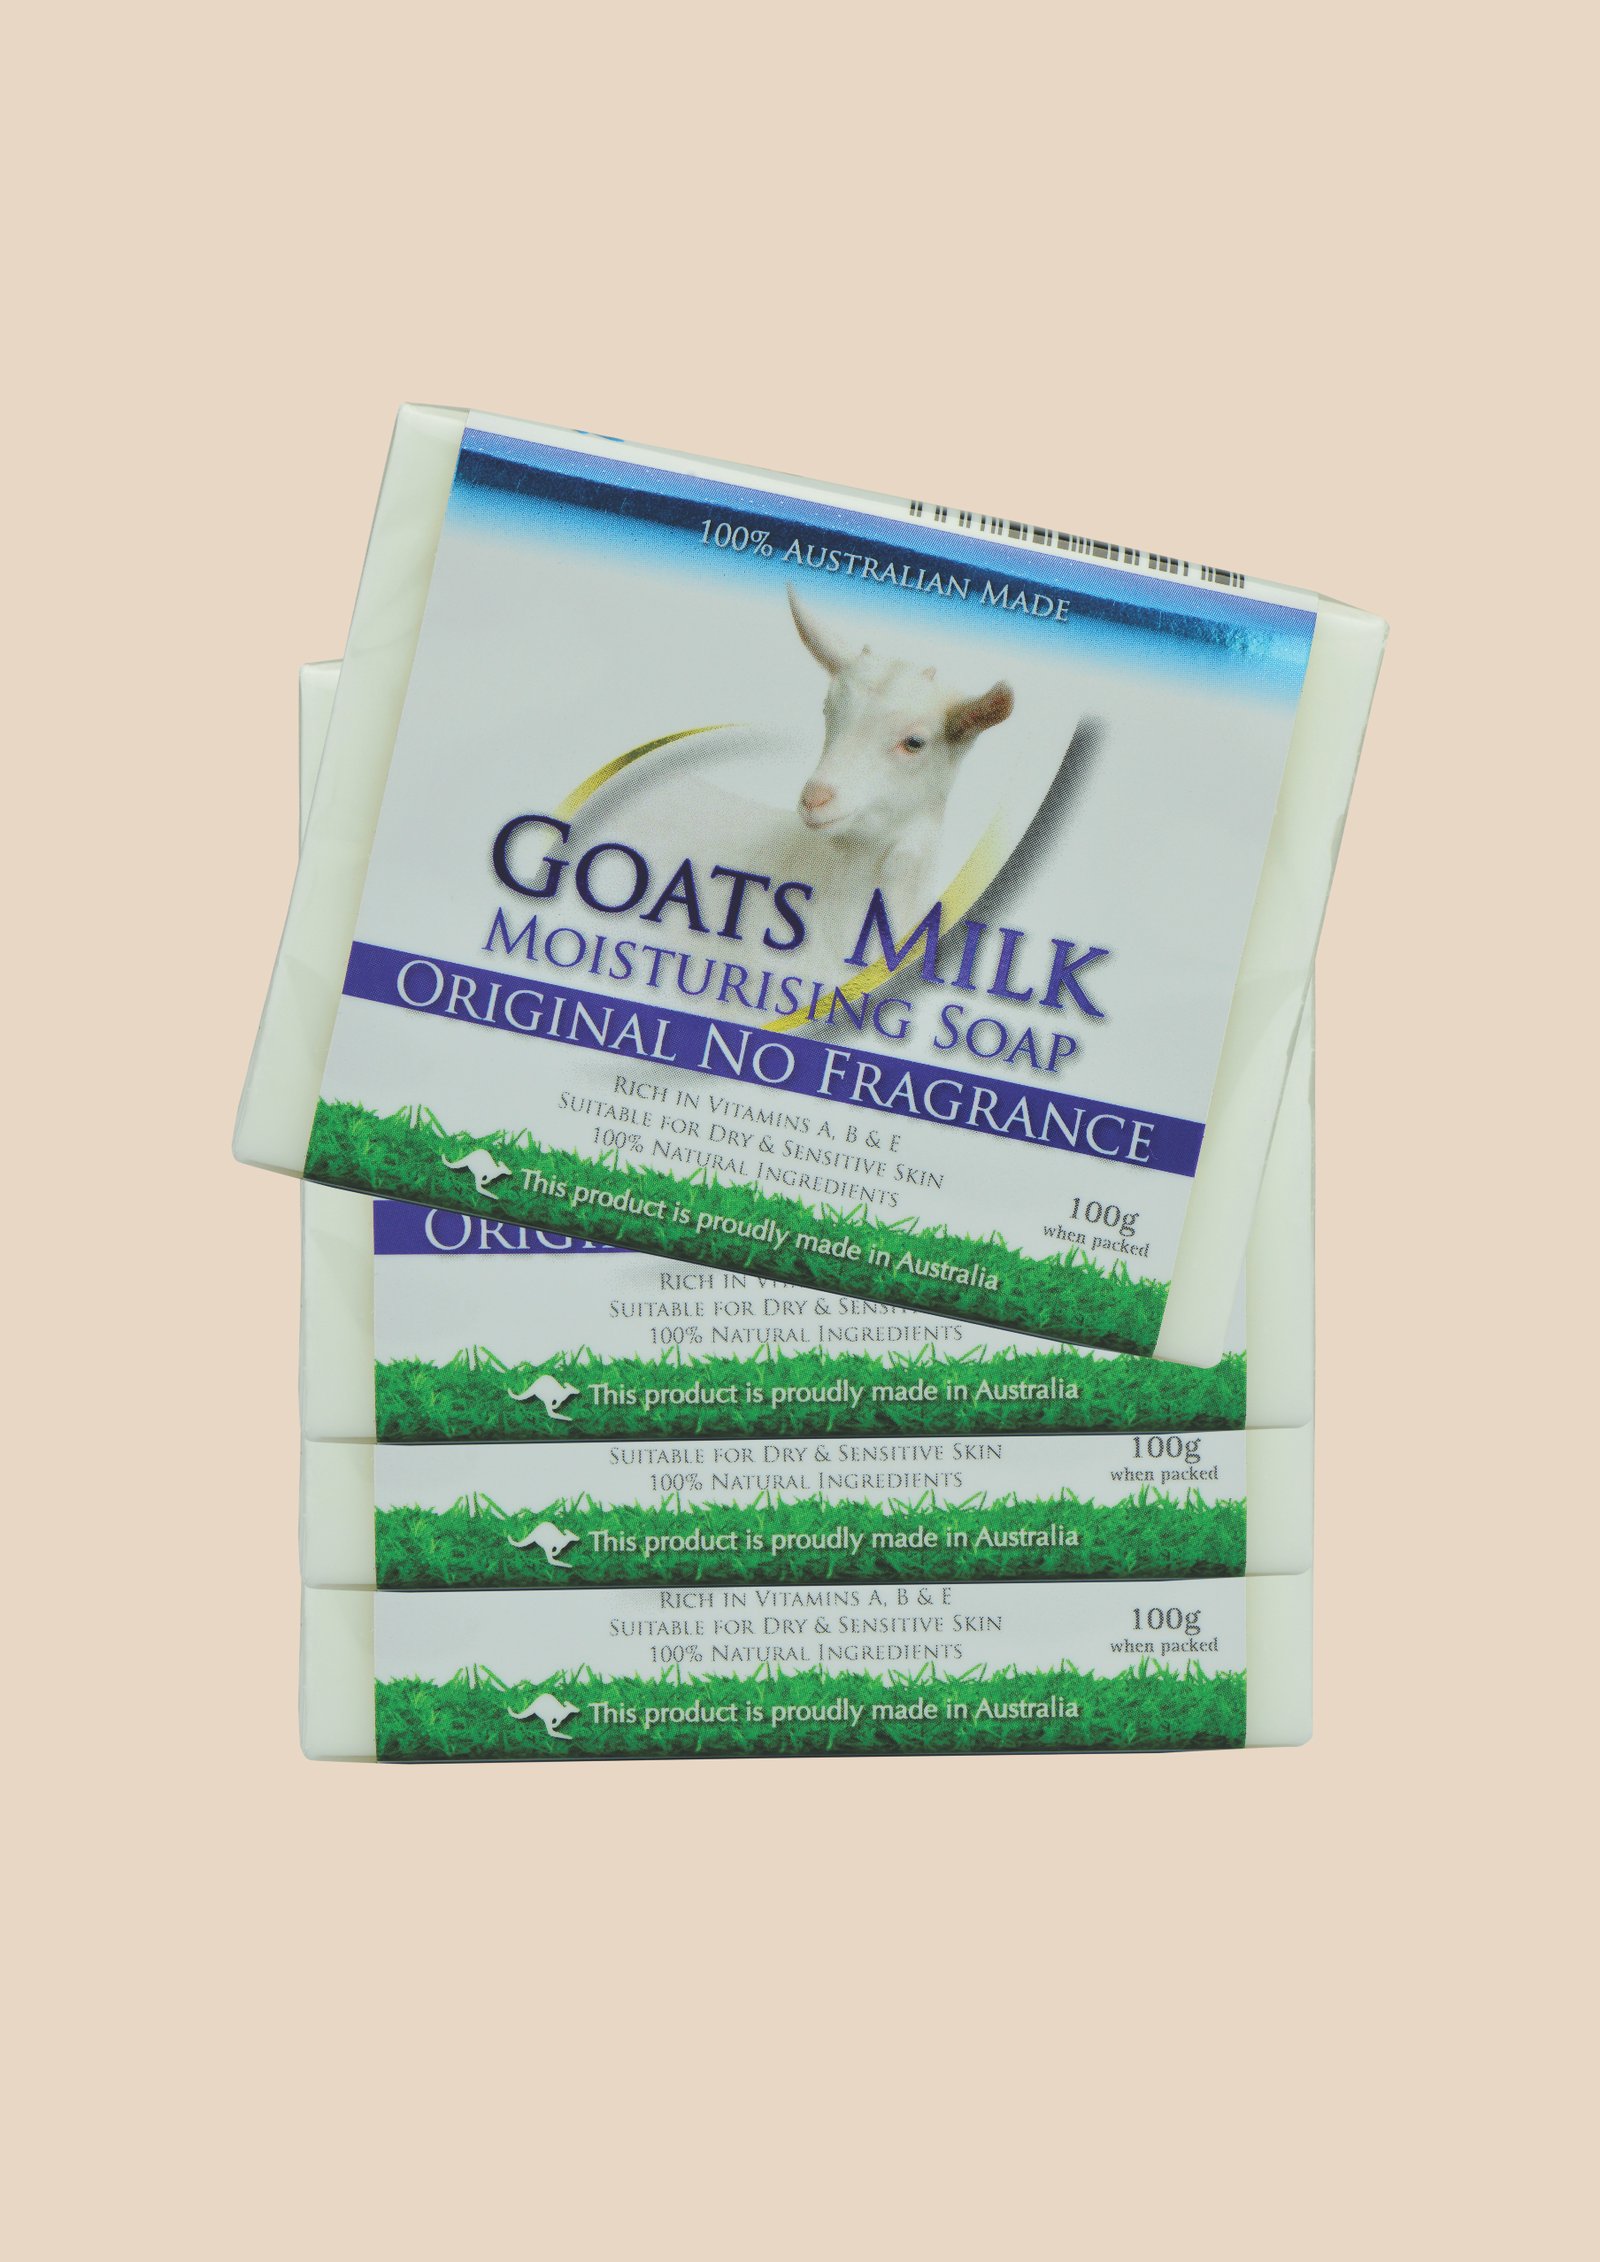 Goats Milk Original/No Fragrance Moisturising Soap 4 pack